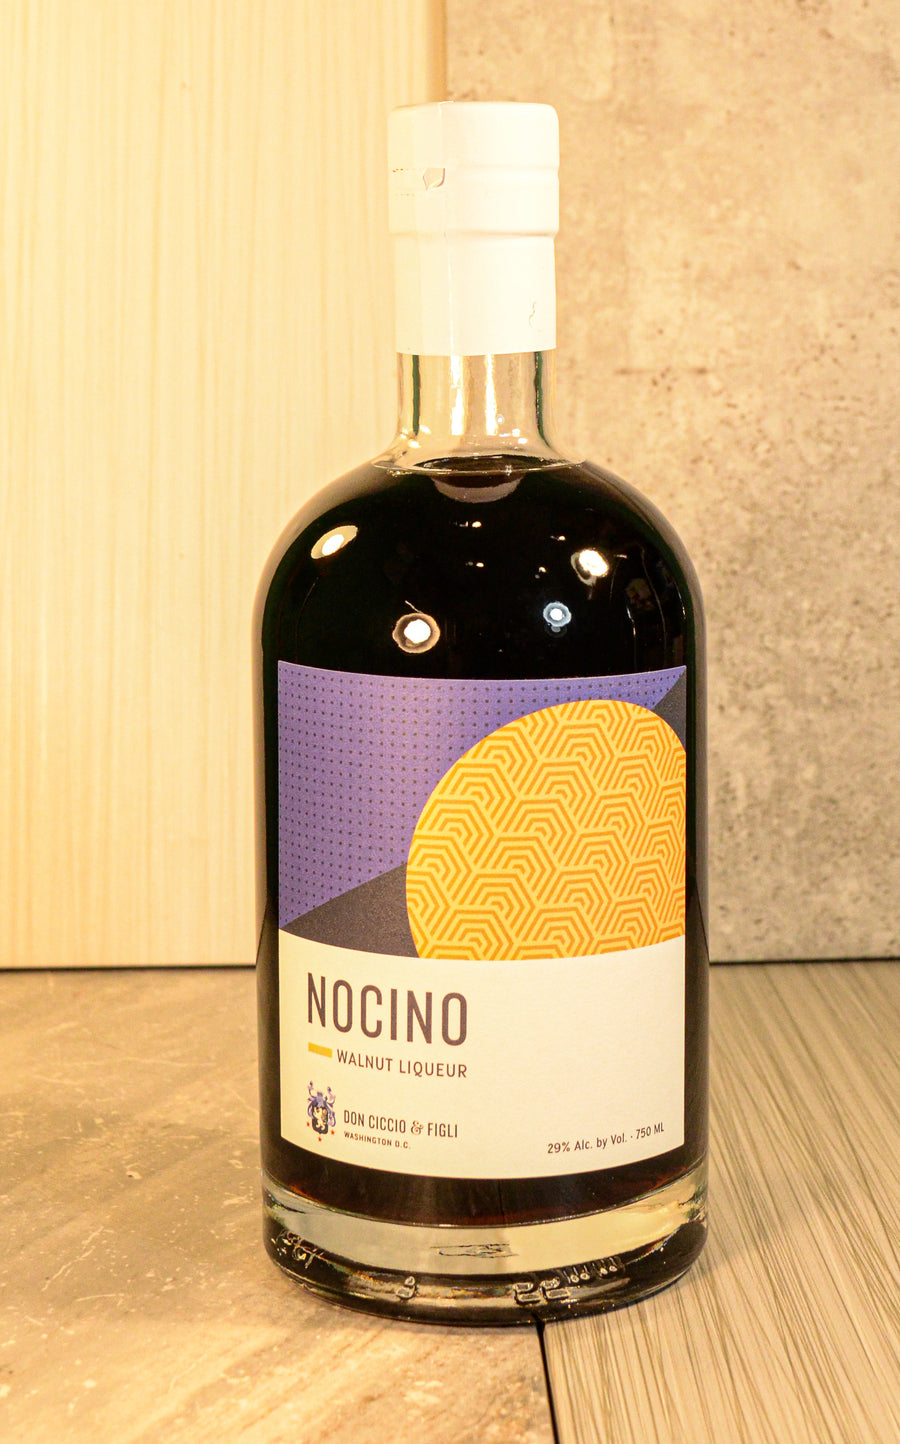 Don Ciccio & Figli, Nocino Walnut Liqueur